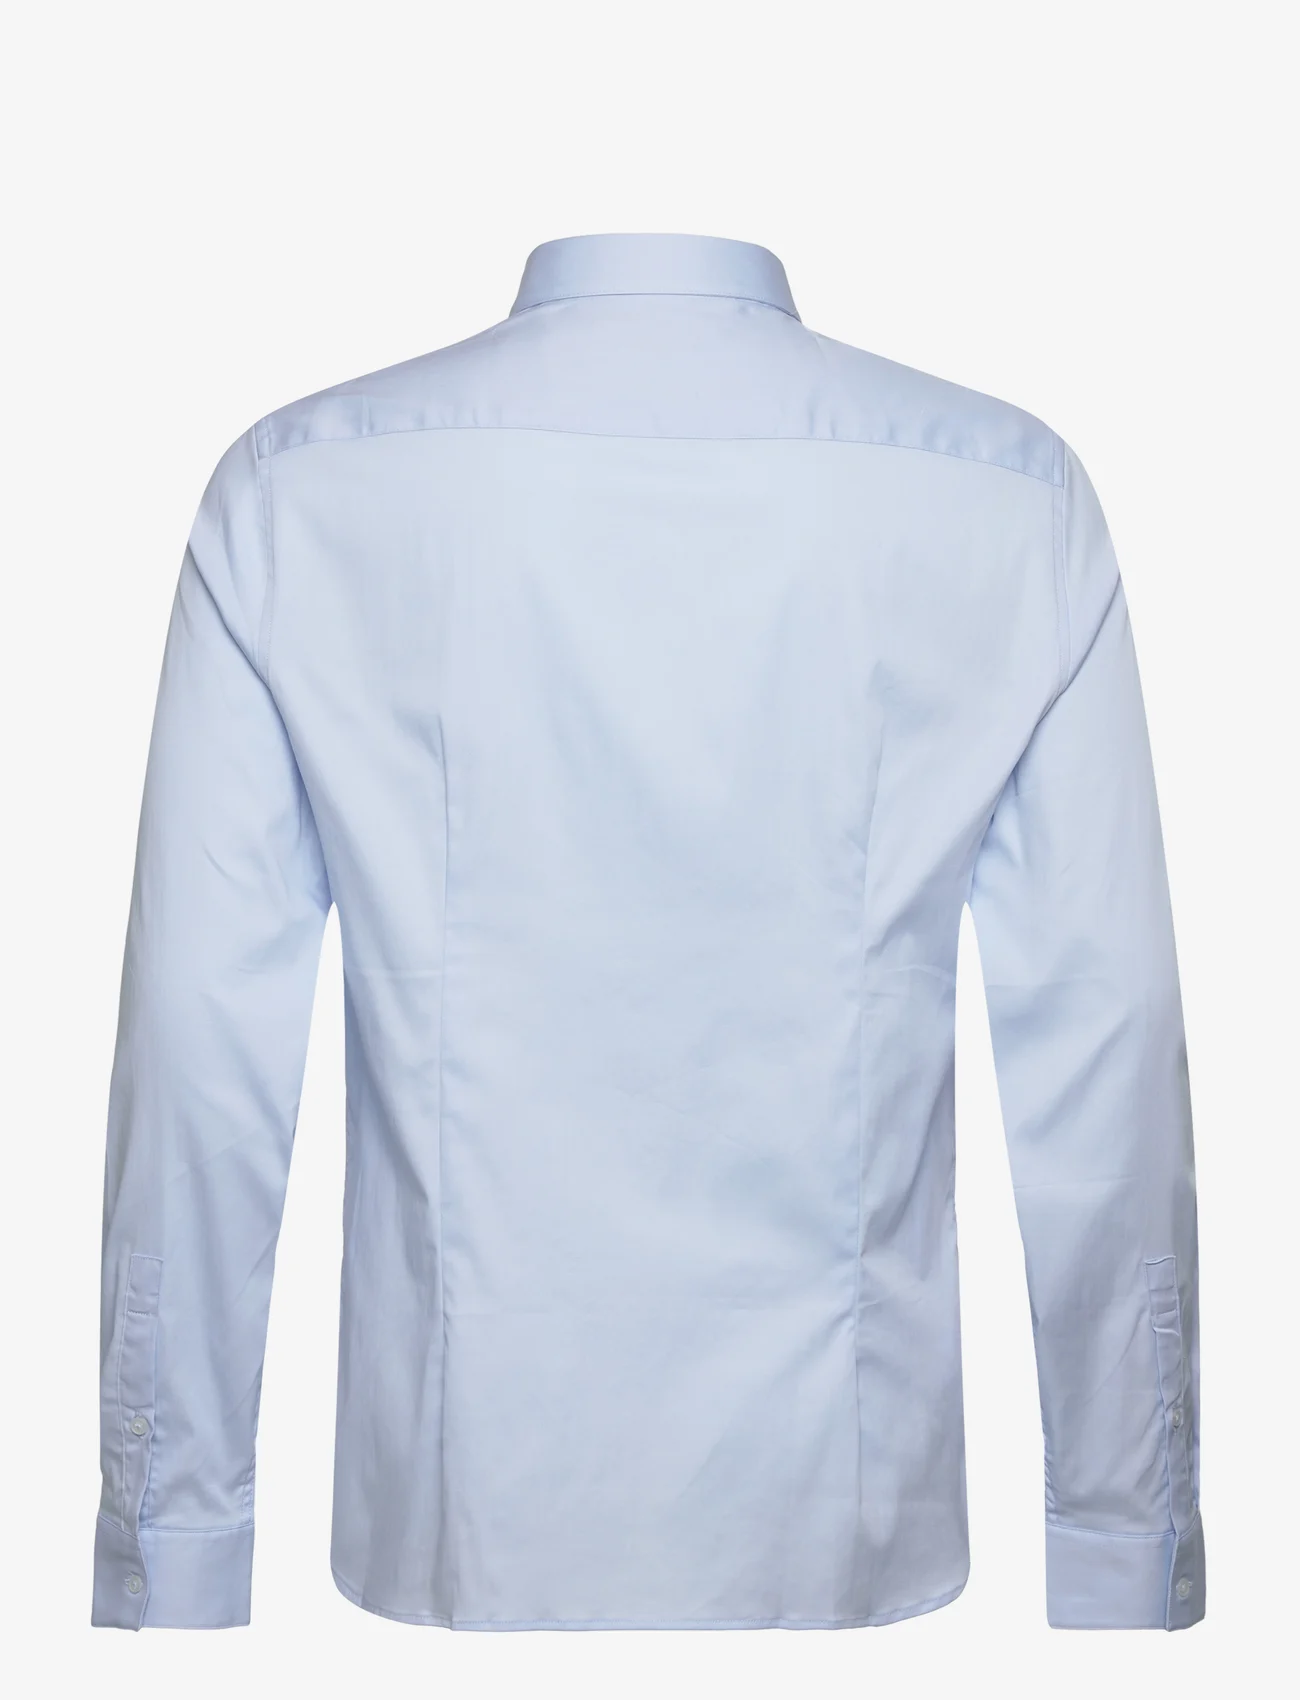 Mango - Super slim-fit poplin suit shirt - basic skjortor - lt-pastel blue - 1